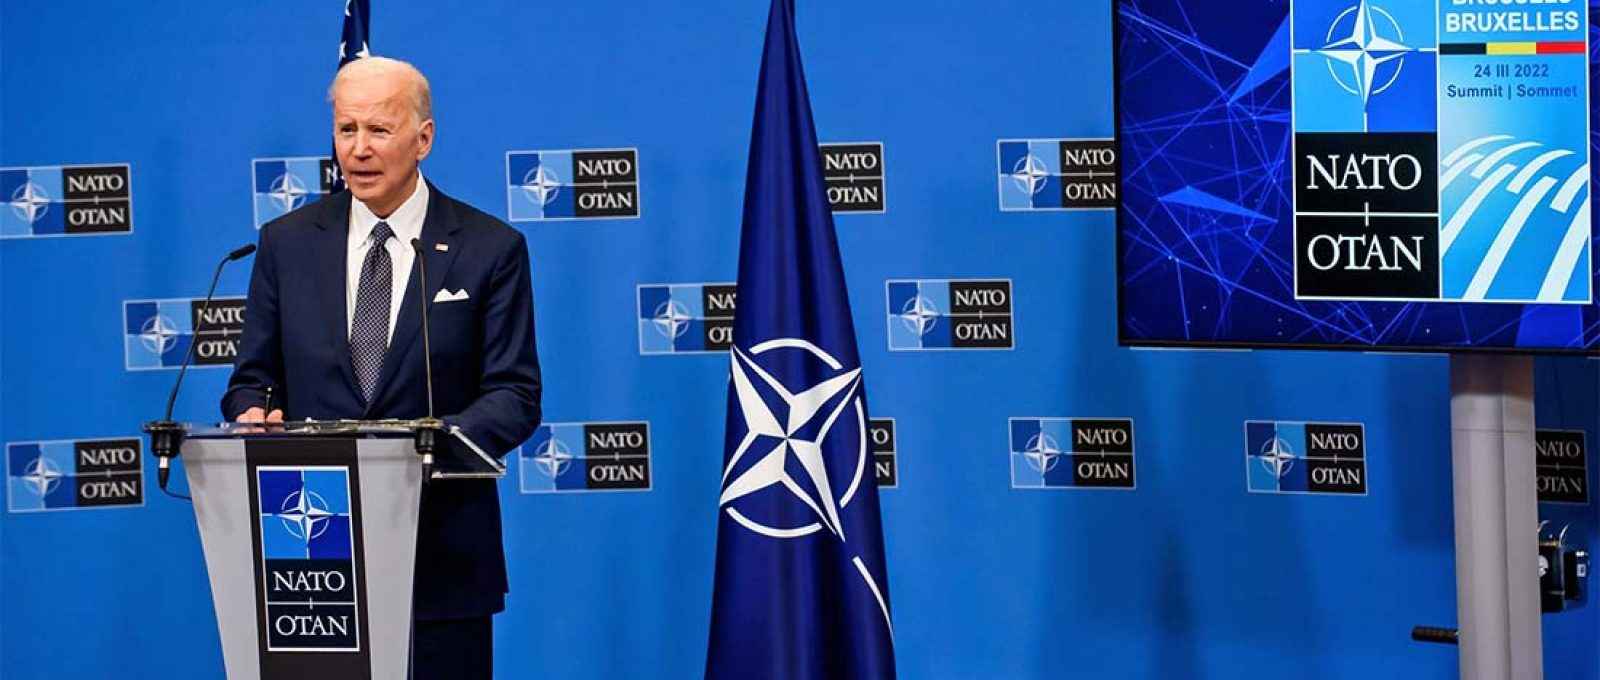 O presidente dos EUA, Joe Biden, fala na cúpula da OTAN em Bruxelas (Gints Ivuskans/Shutterstock).